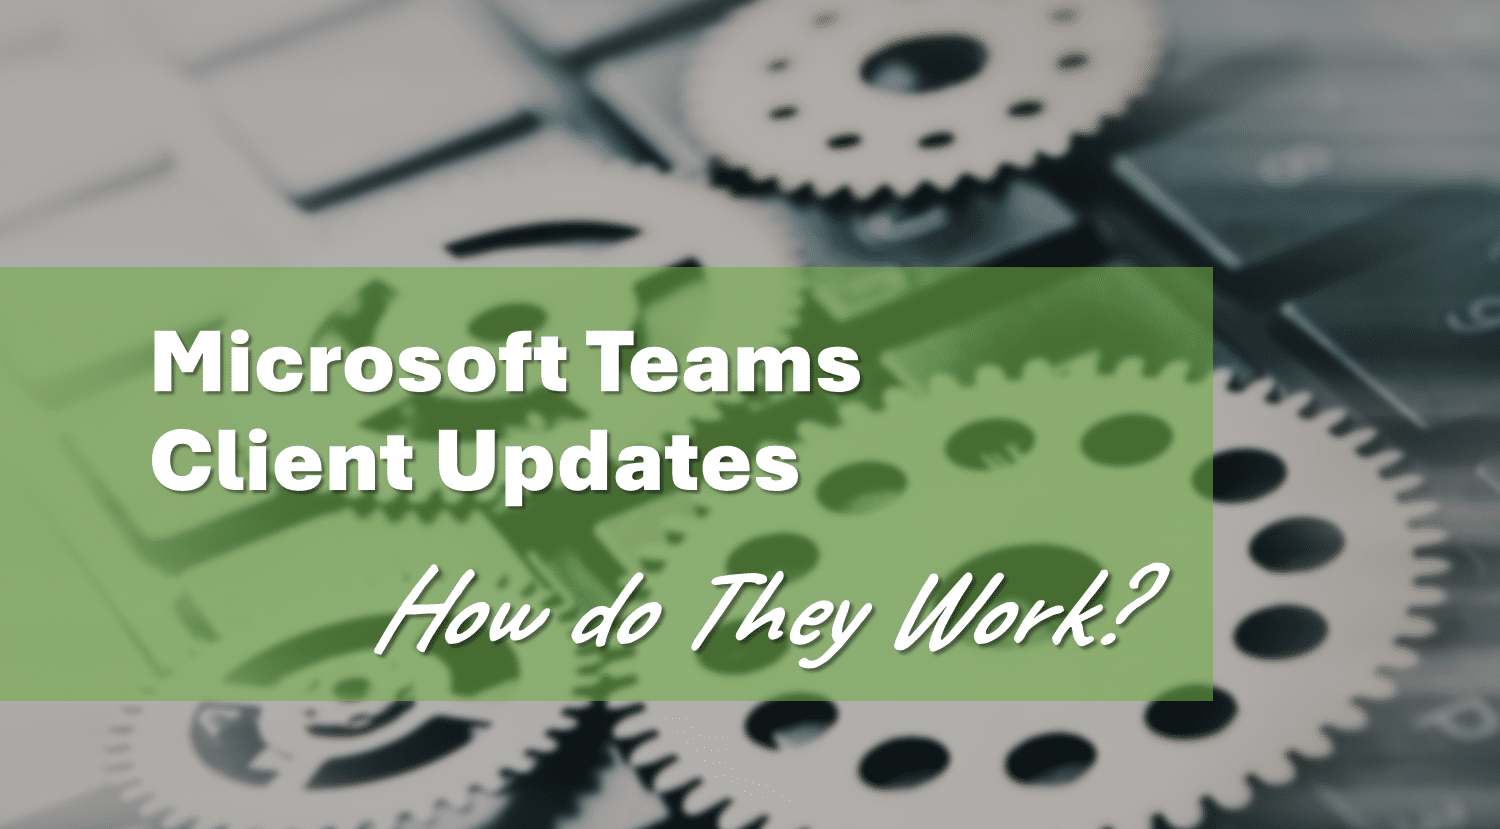 How a Microsoft Teams Update reaches an End User